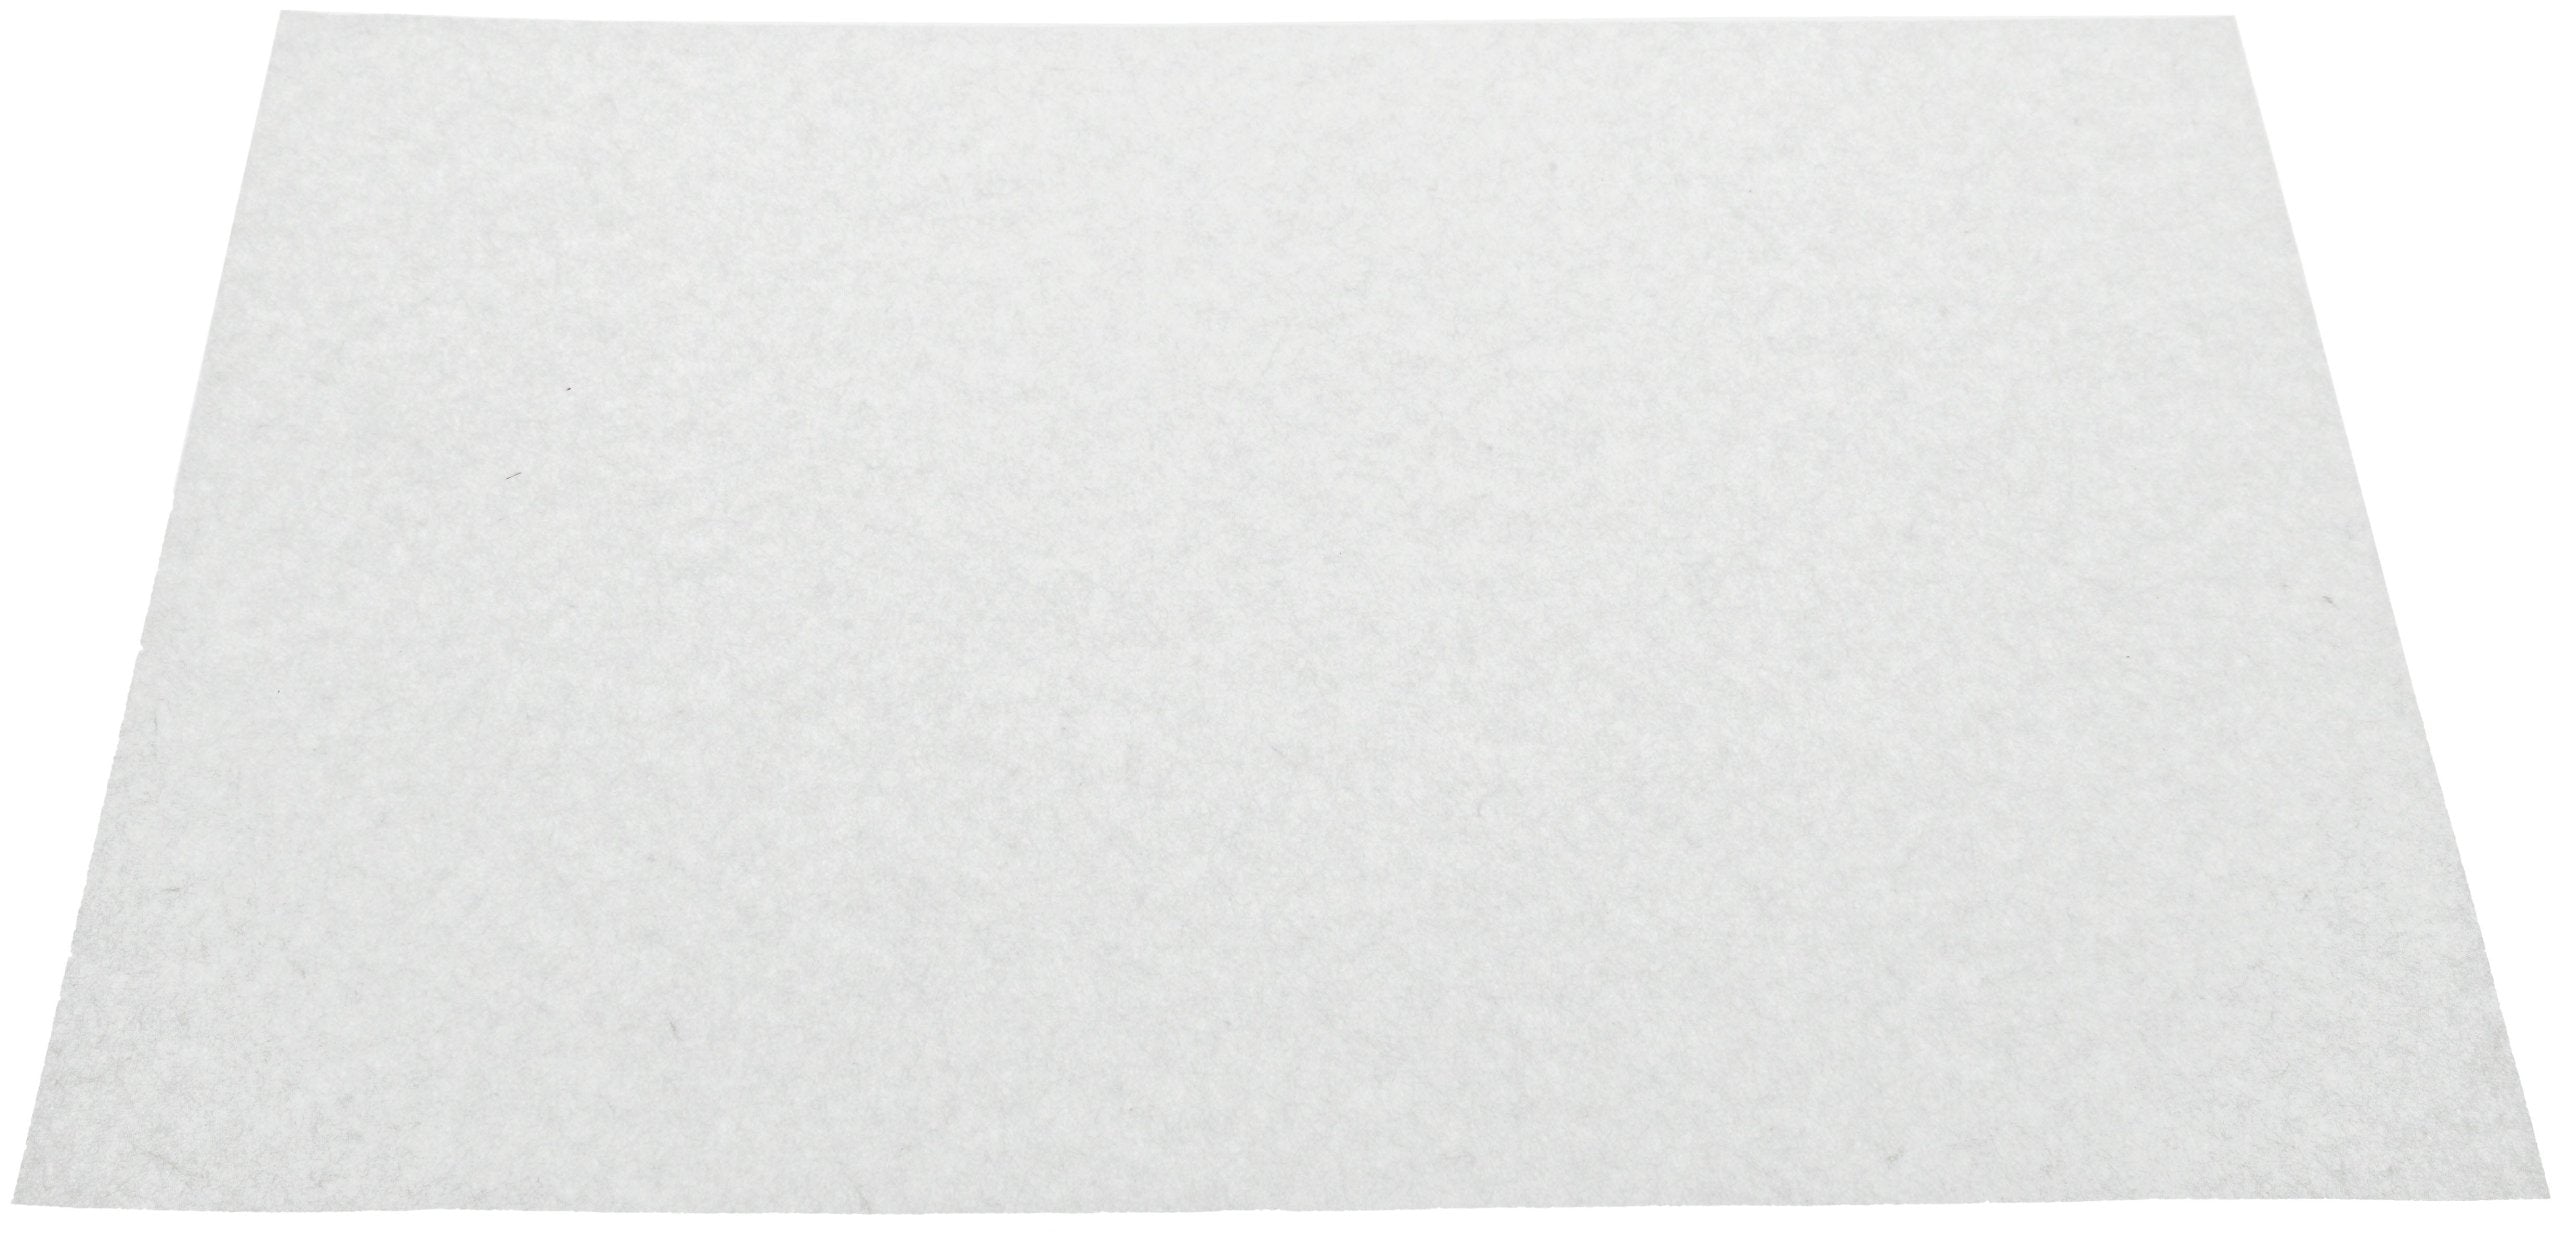 Whatman 10426890 Blotting Paper, Pure Cellulose, Grade GB003 Sheets, 30 x 60cm, 25/pk